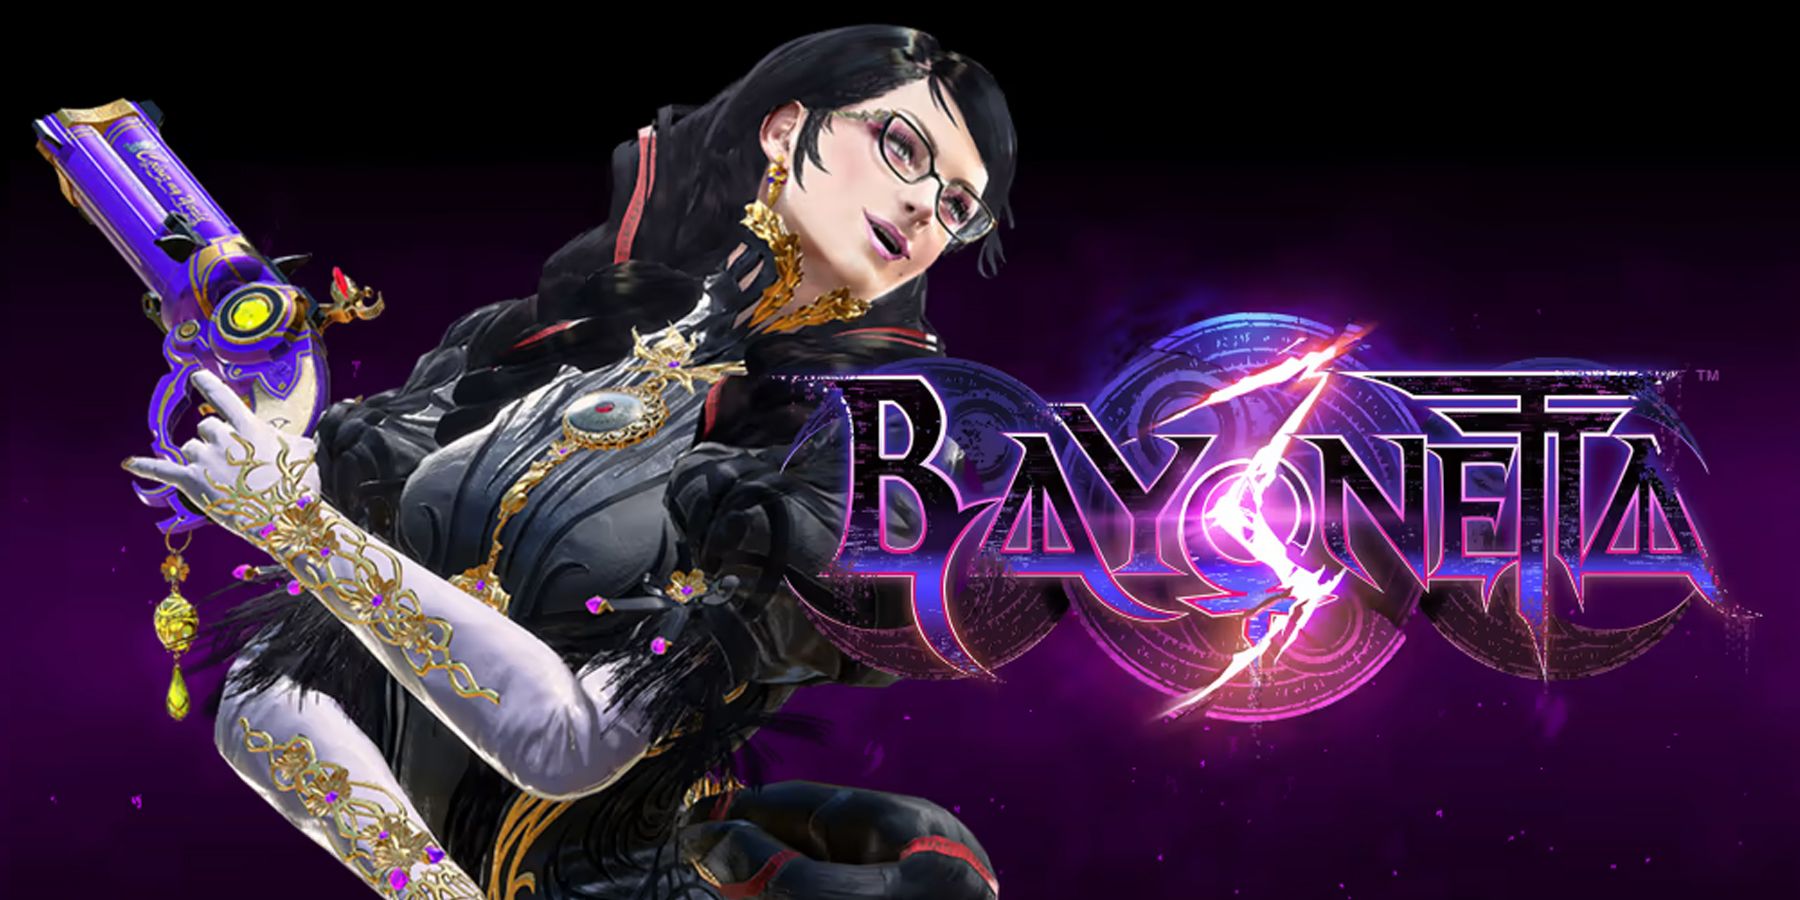 Bayonetta 3 Version 1.2.0 Update Makes Gameplay Adjustments,
Fixes Bugs